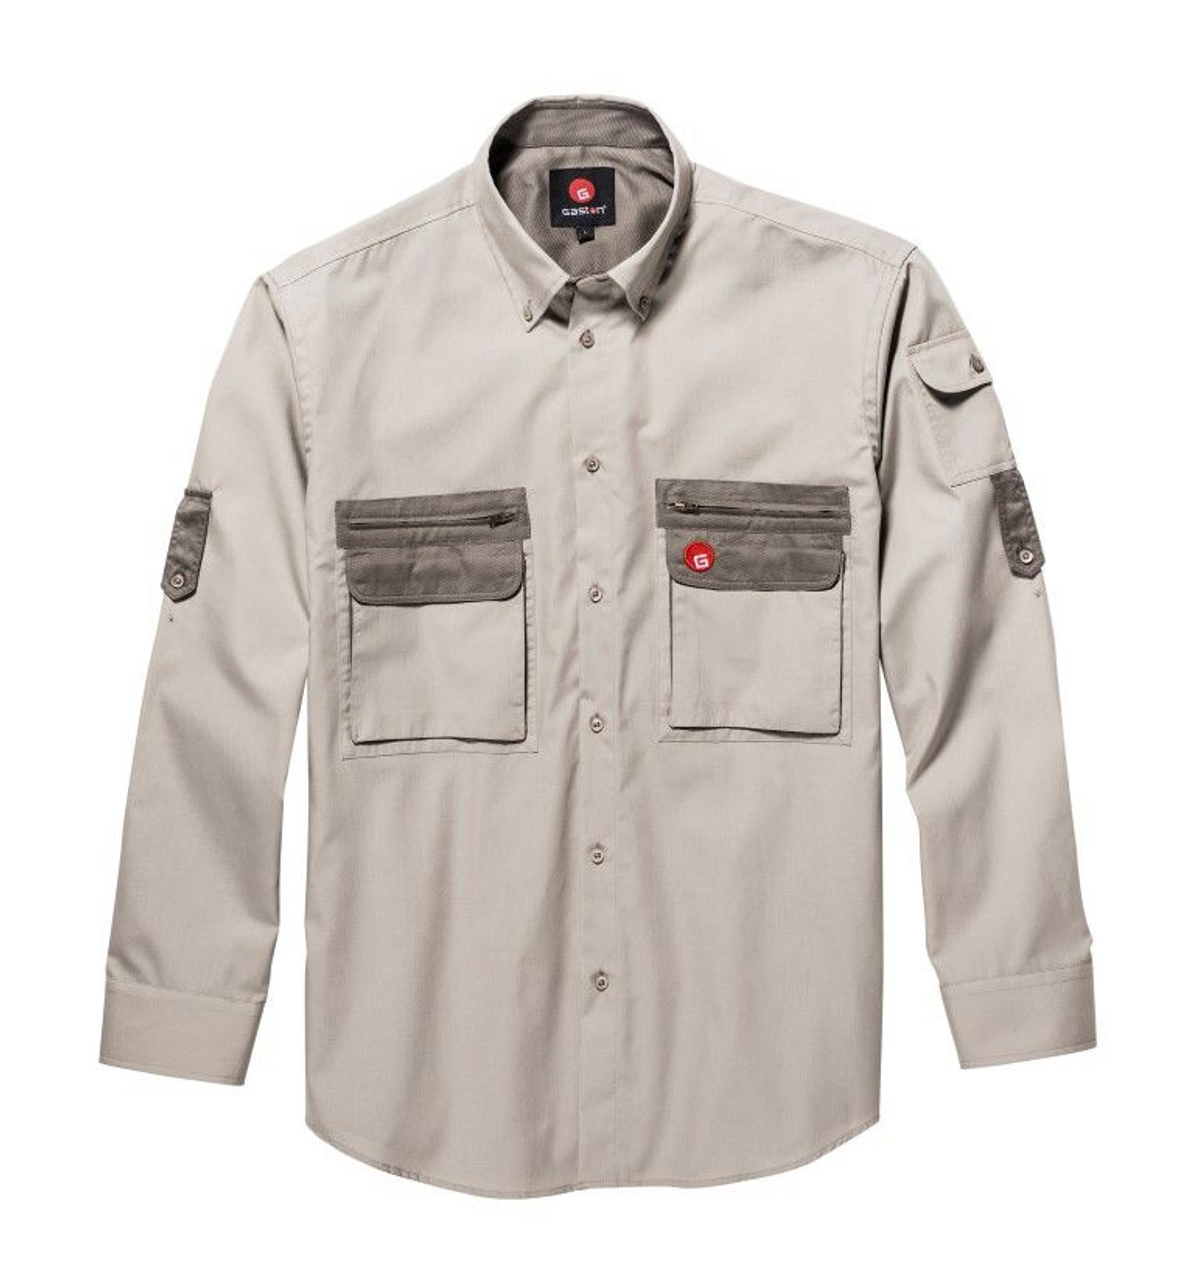 Gaston J. Glock Men's Safari Shirt Kalahari with Zipper Pockets -  Connecticut Shotgun Manufacturing Company